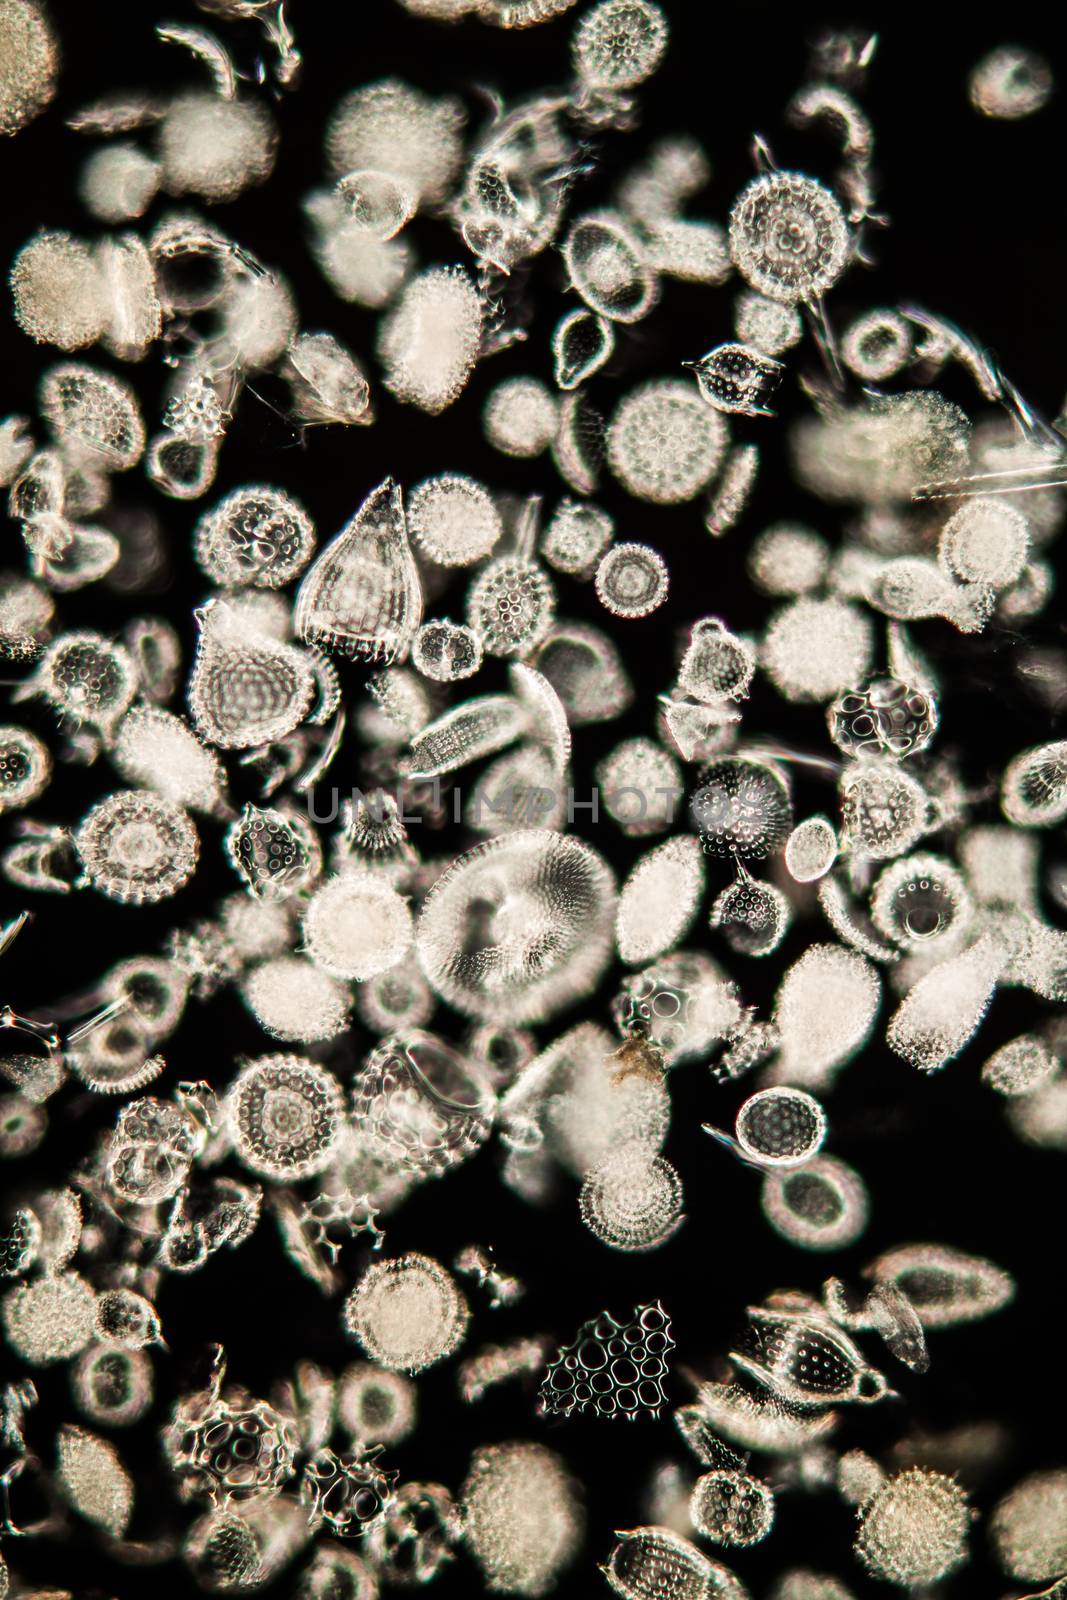 Radiolaria marine animals under the microscope 100x by Dr-Lange